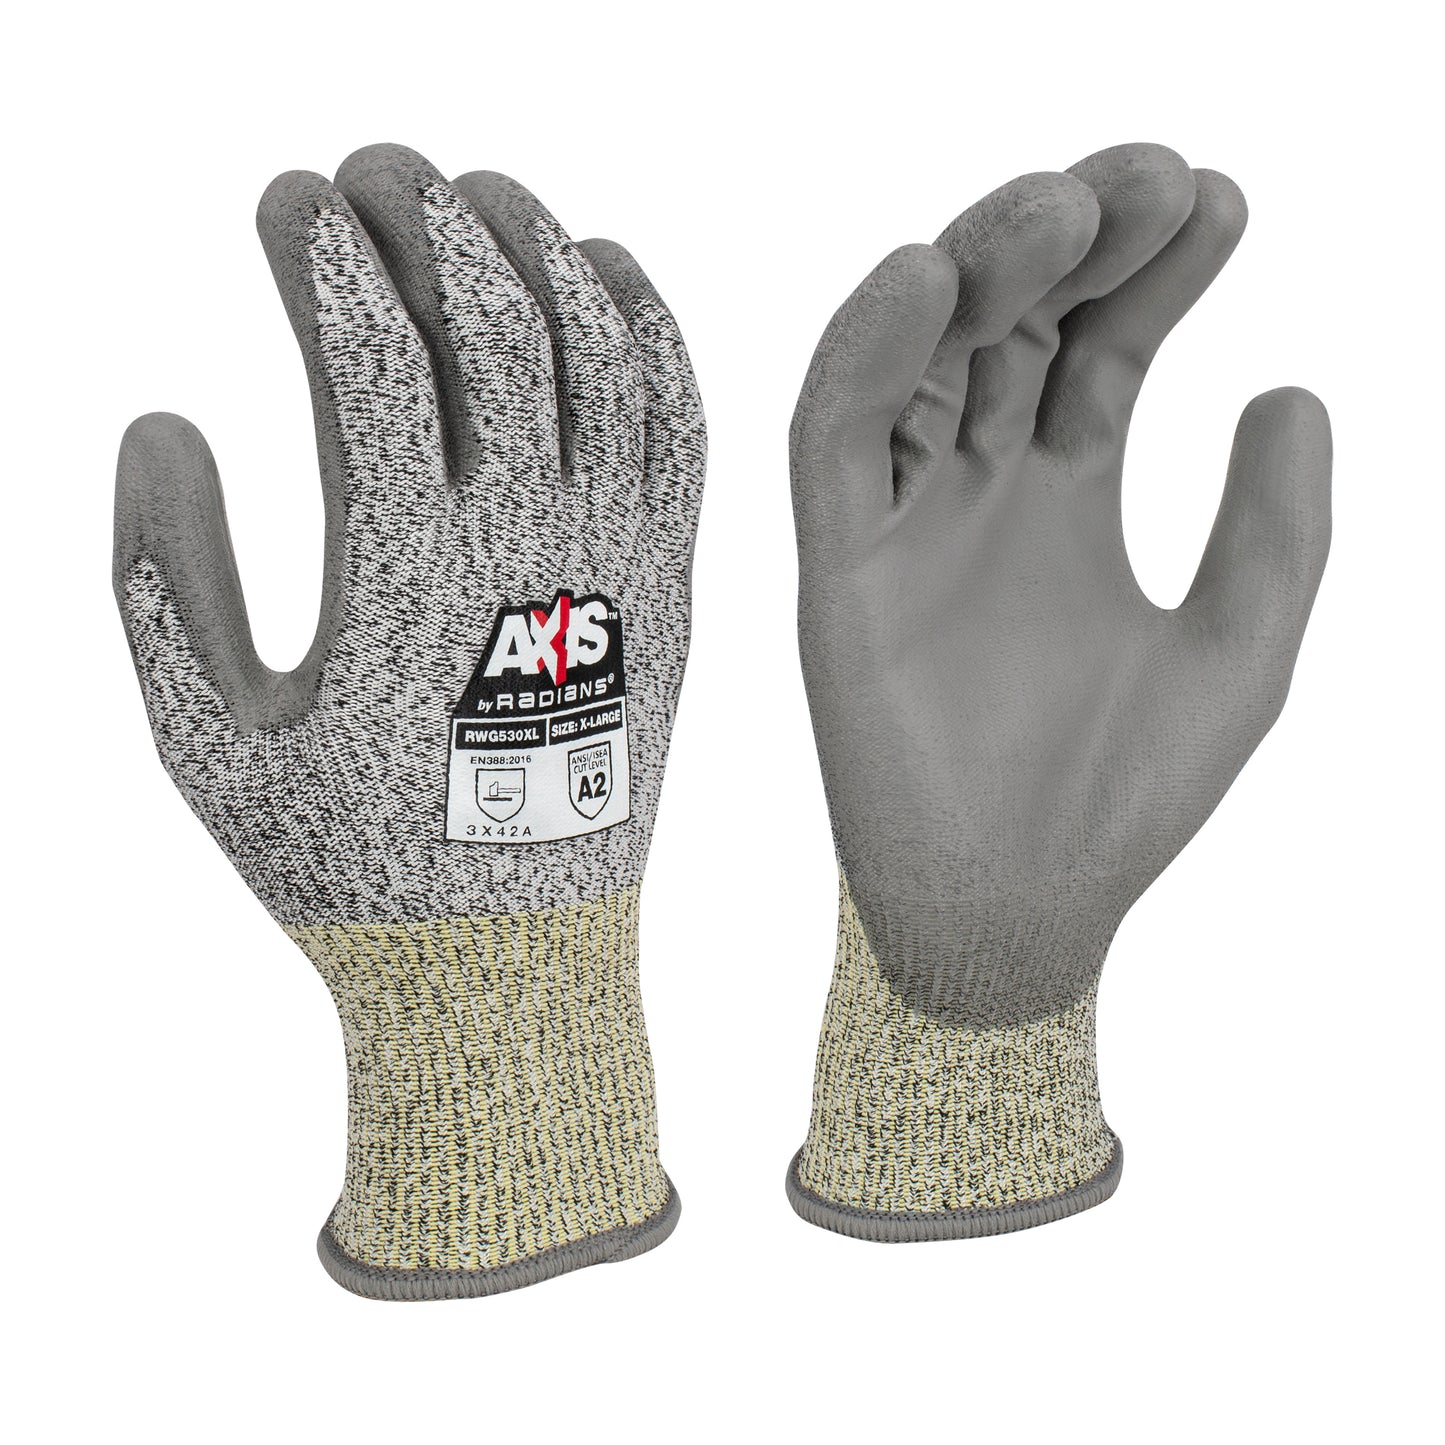 Radians RWG530 AXIS Cut Protection Level A2 Work Glove